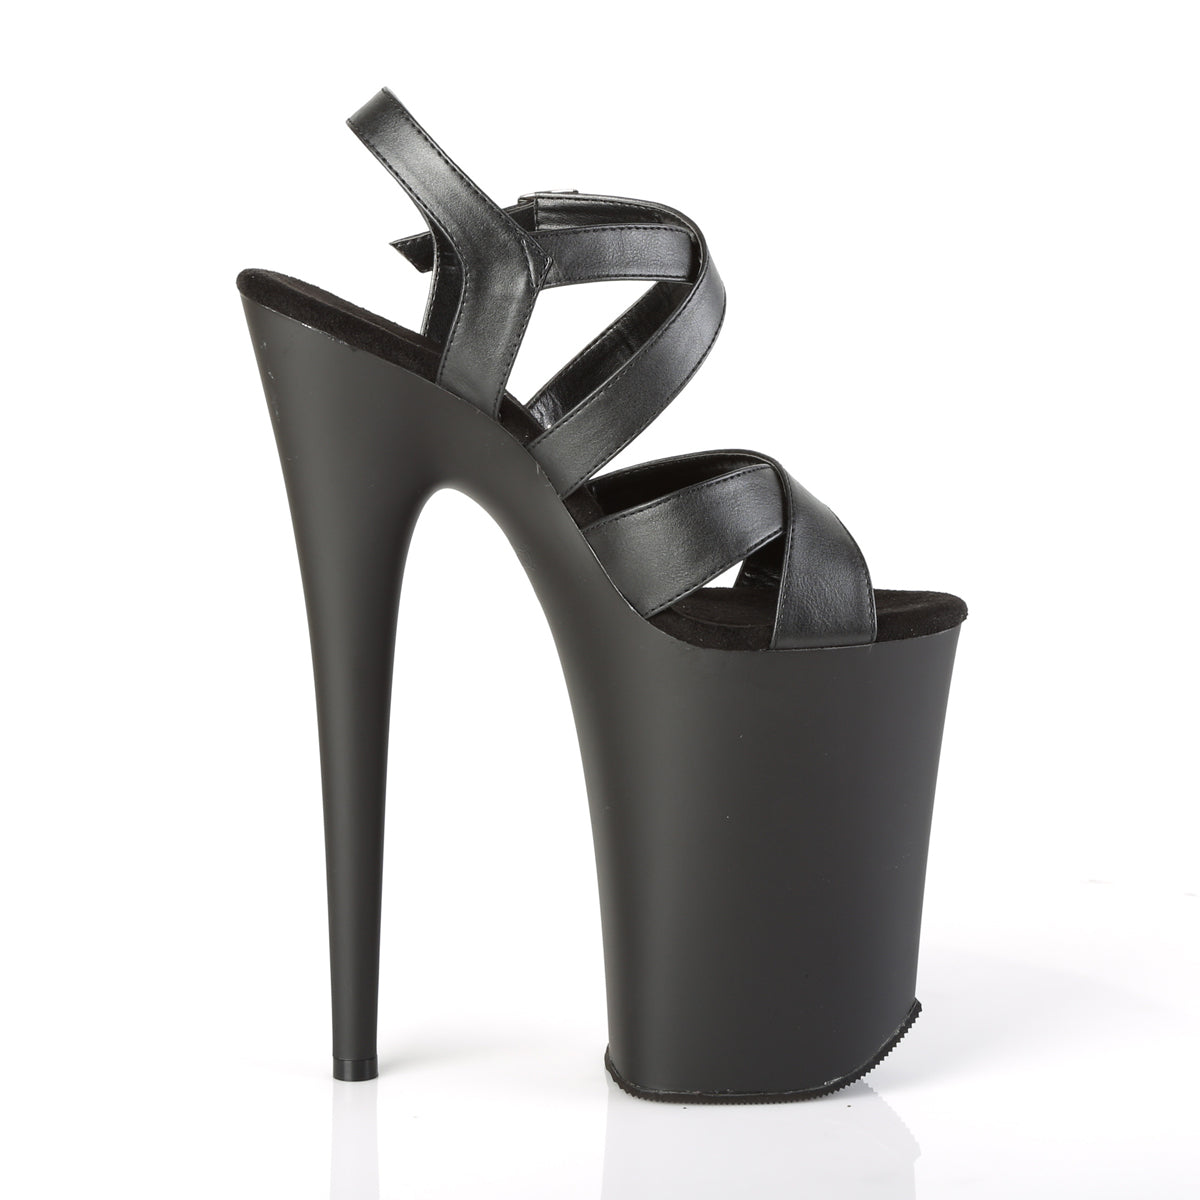 INFINITY-997 Pleaser Black Faux Leather/Black Matte Platform Shoes [9 Inch High Heels]